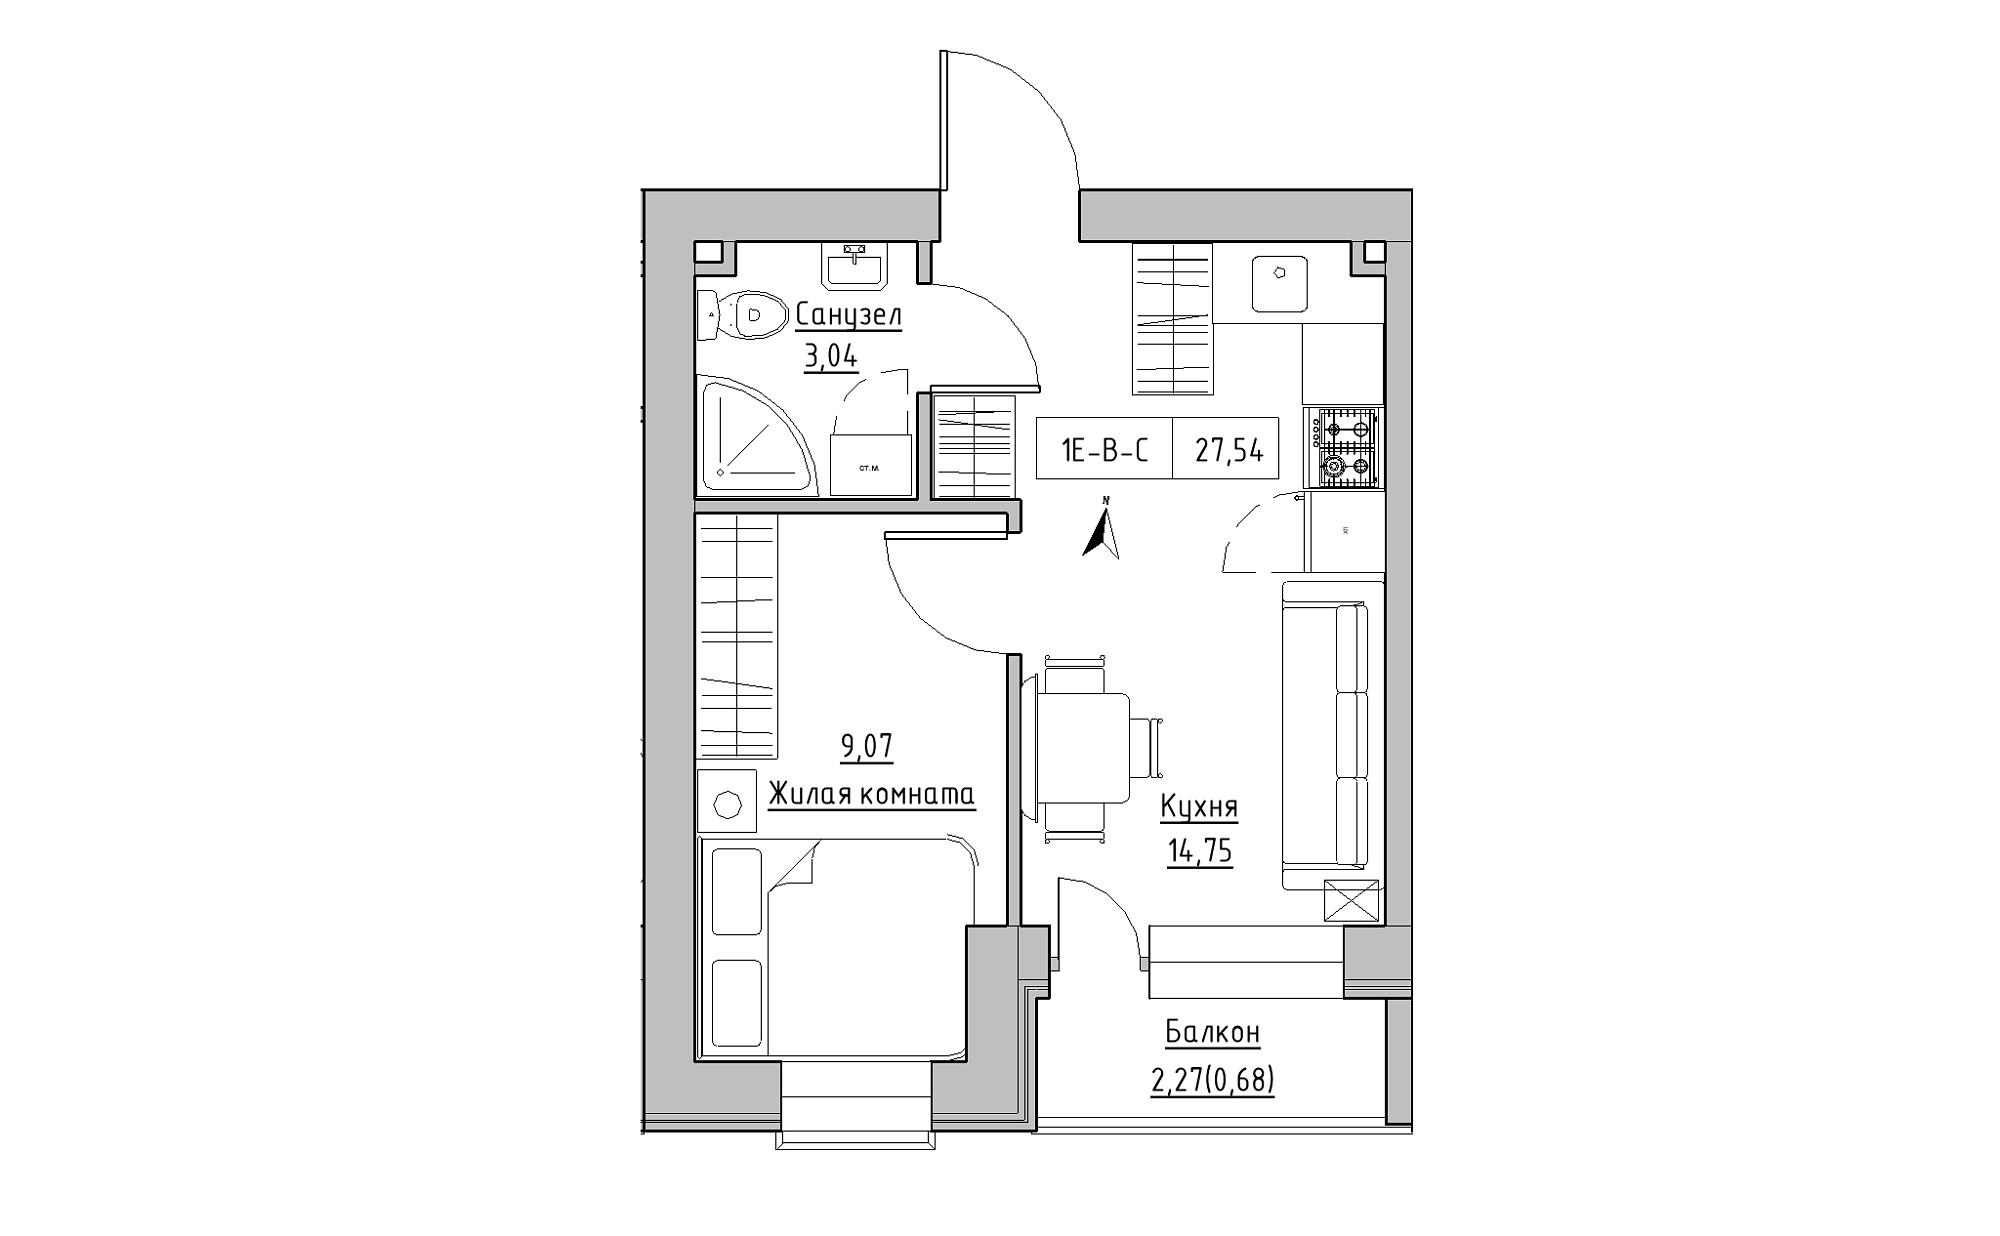 Planning 1-rm flats area 27.54m2, KS-023-05/0012.